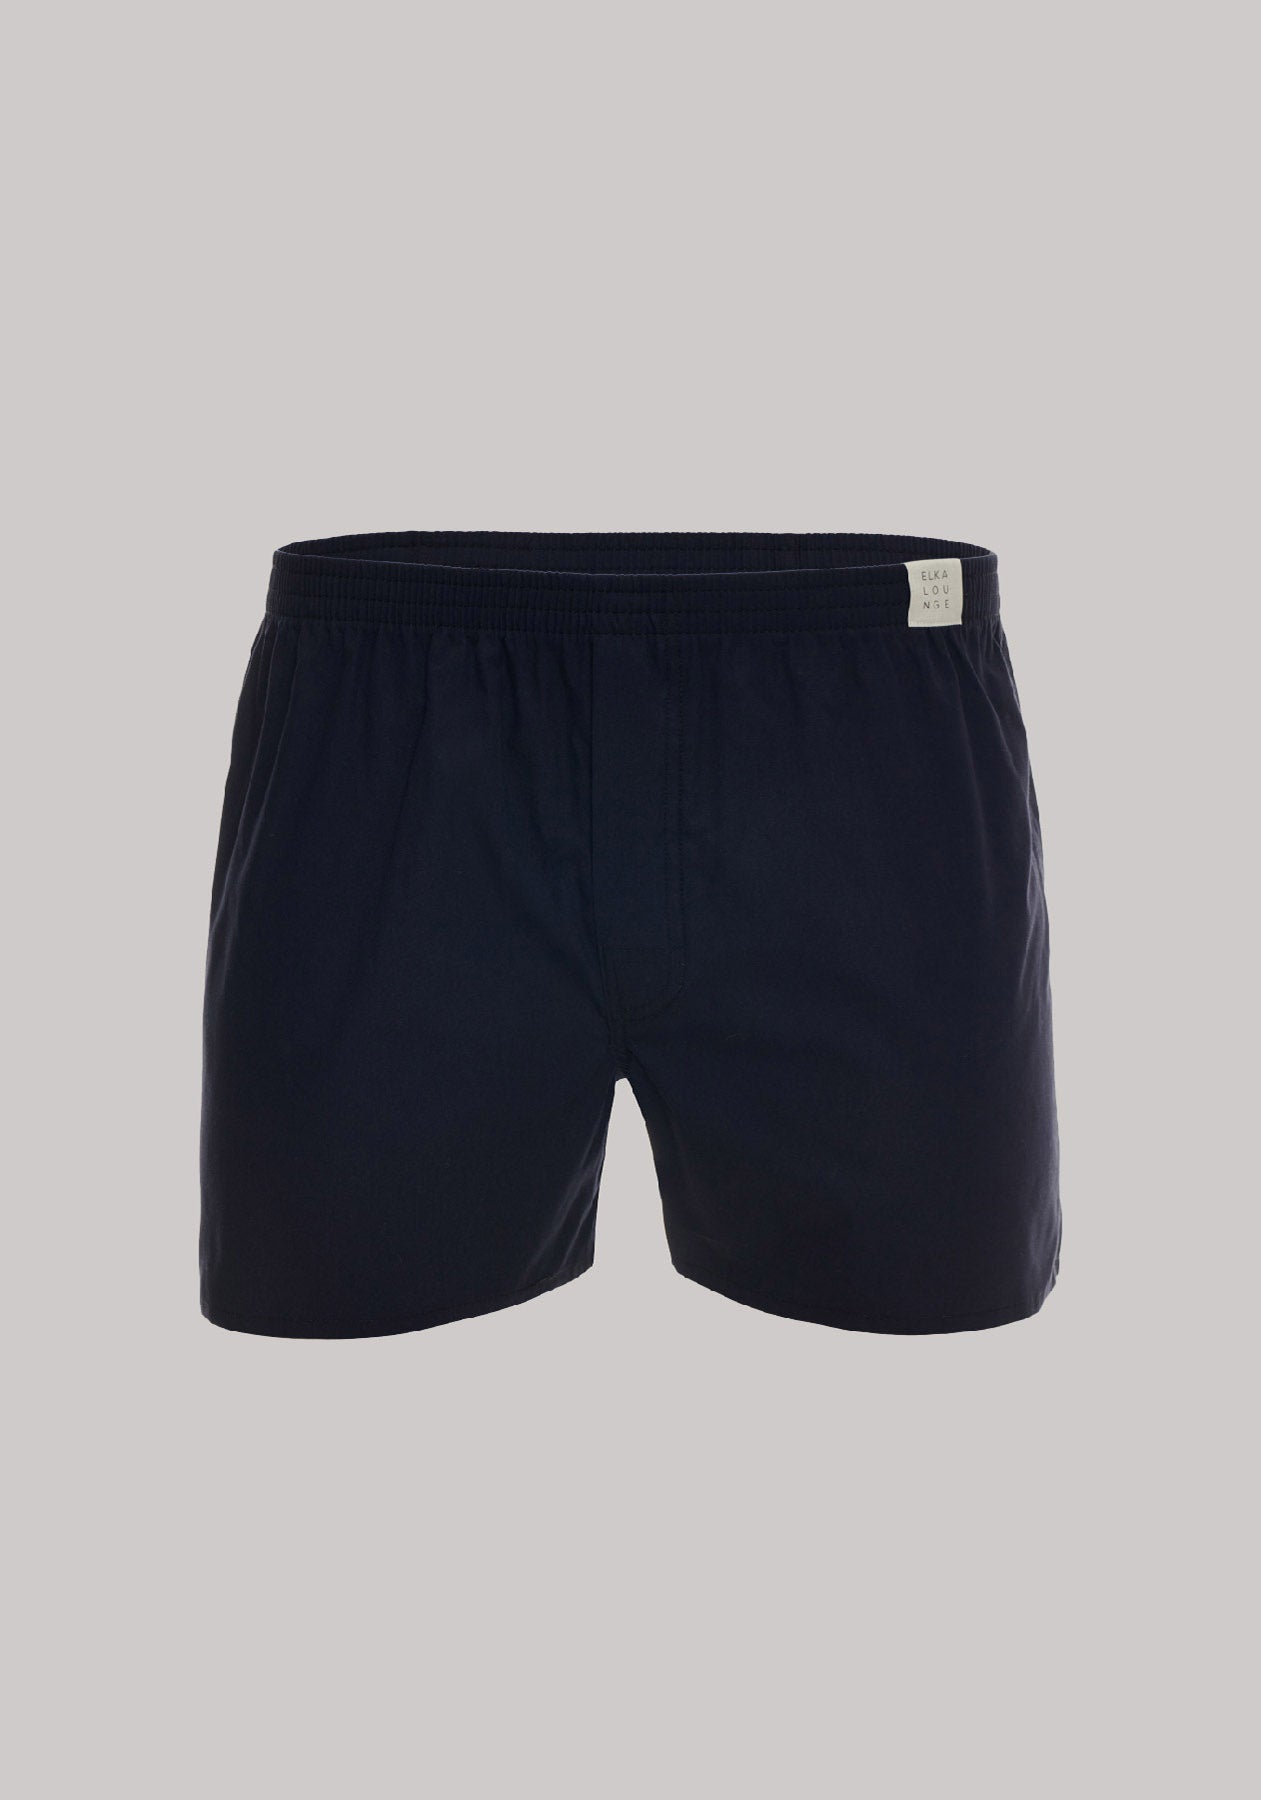 Men's shorts Navy blue